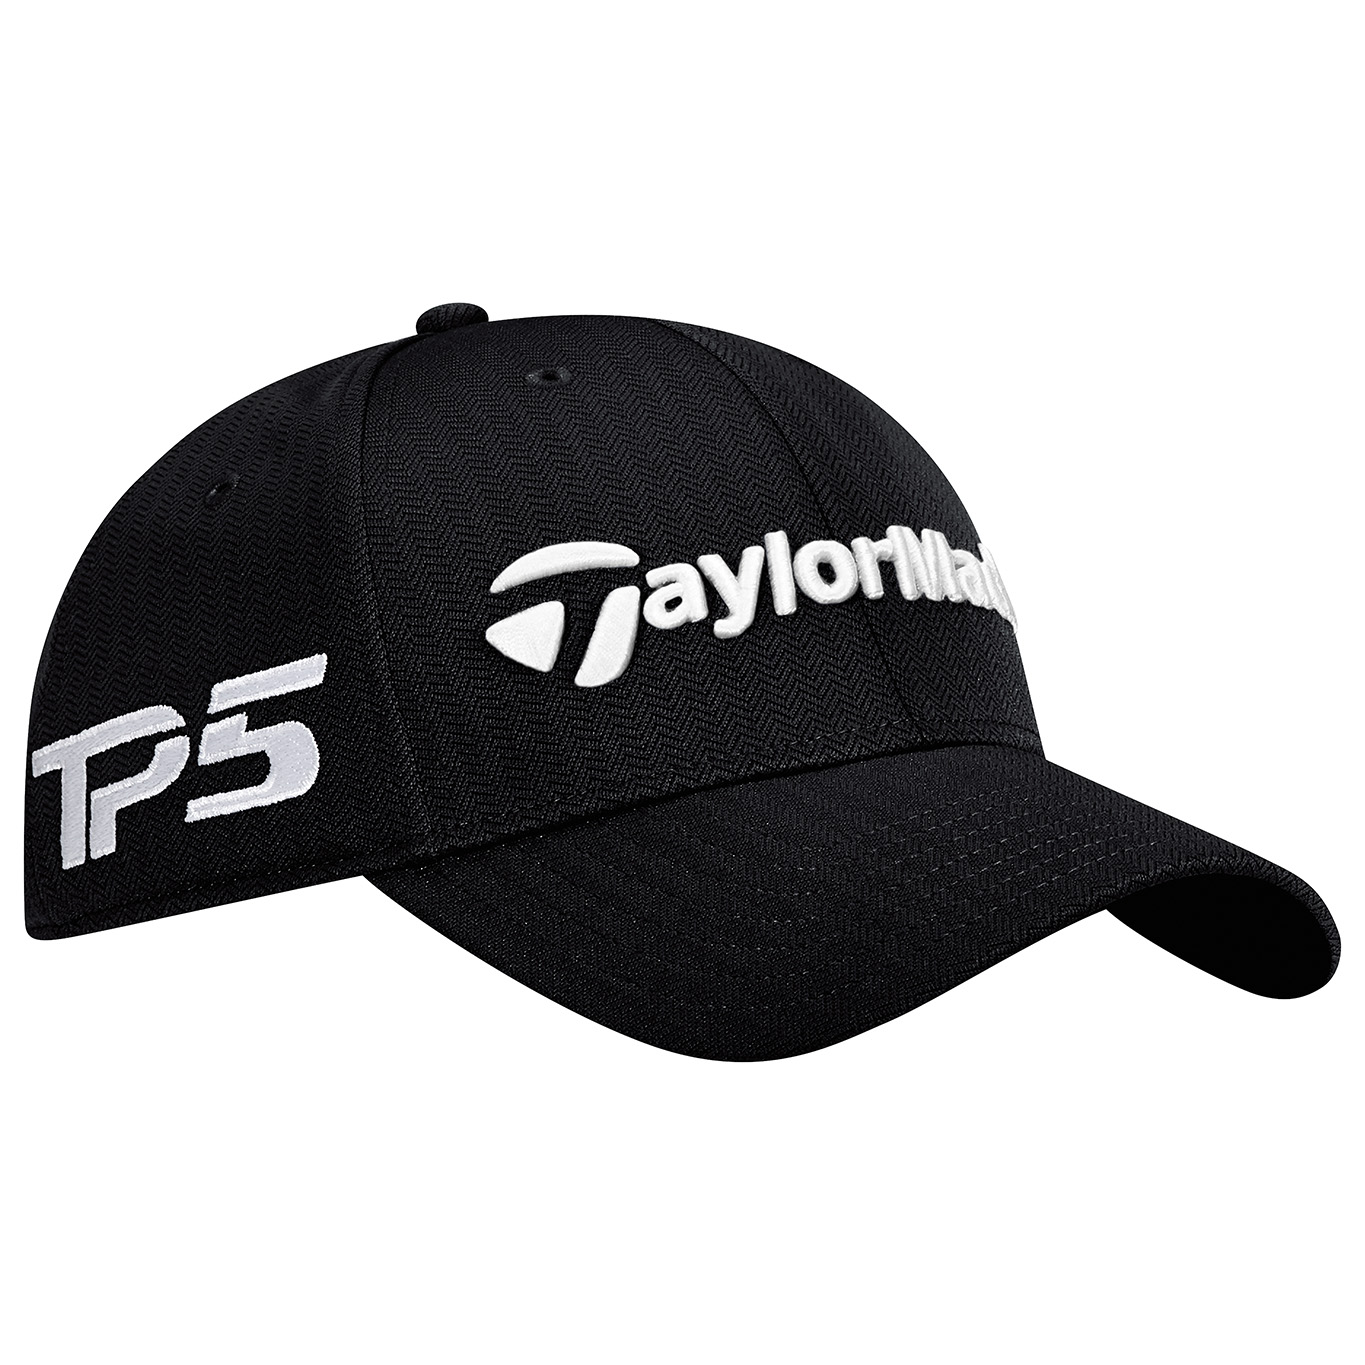 Taylormade Golf 2017 Tour Radar M1 TP5 Adjustable Hat/Cap COLOR: Black ...